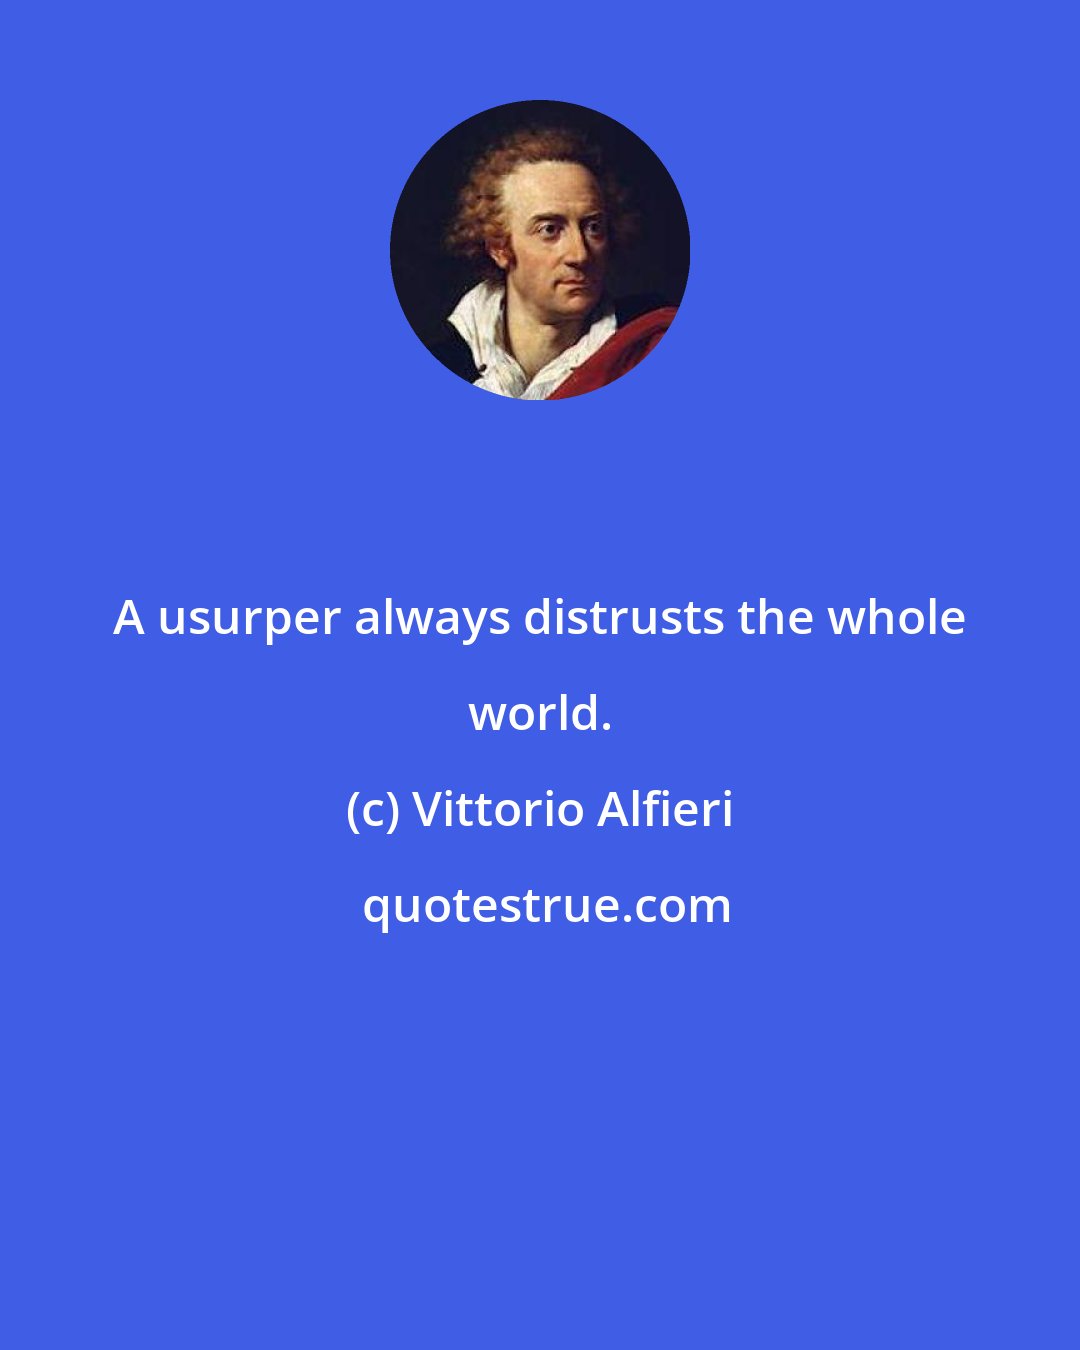 Vittorio Alfieri: A usurper always distrusts the whole world.